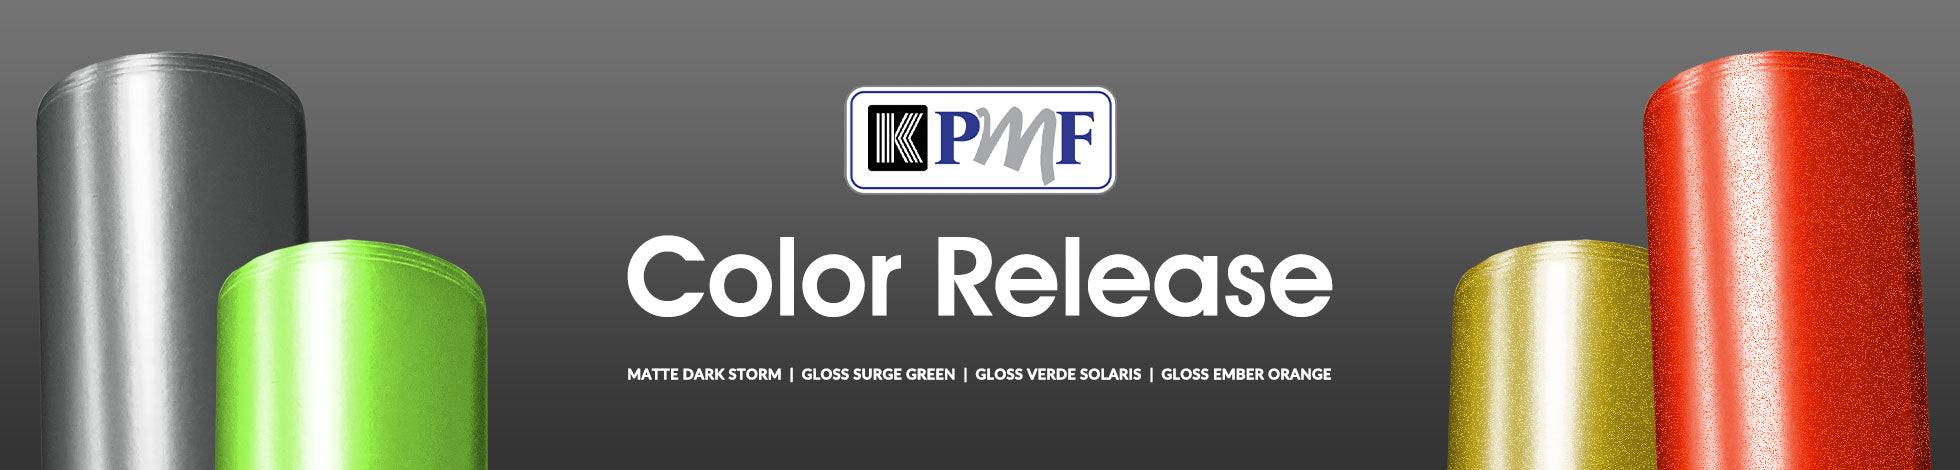 New KPMF Color Release